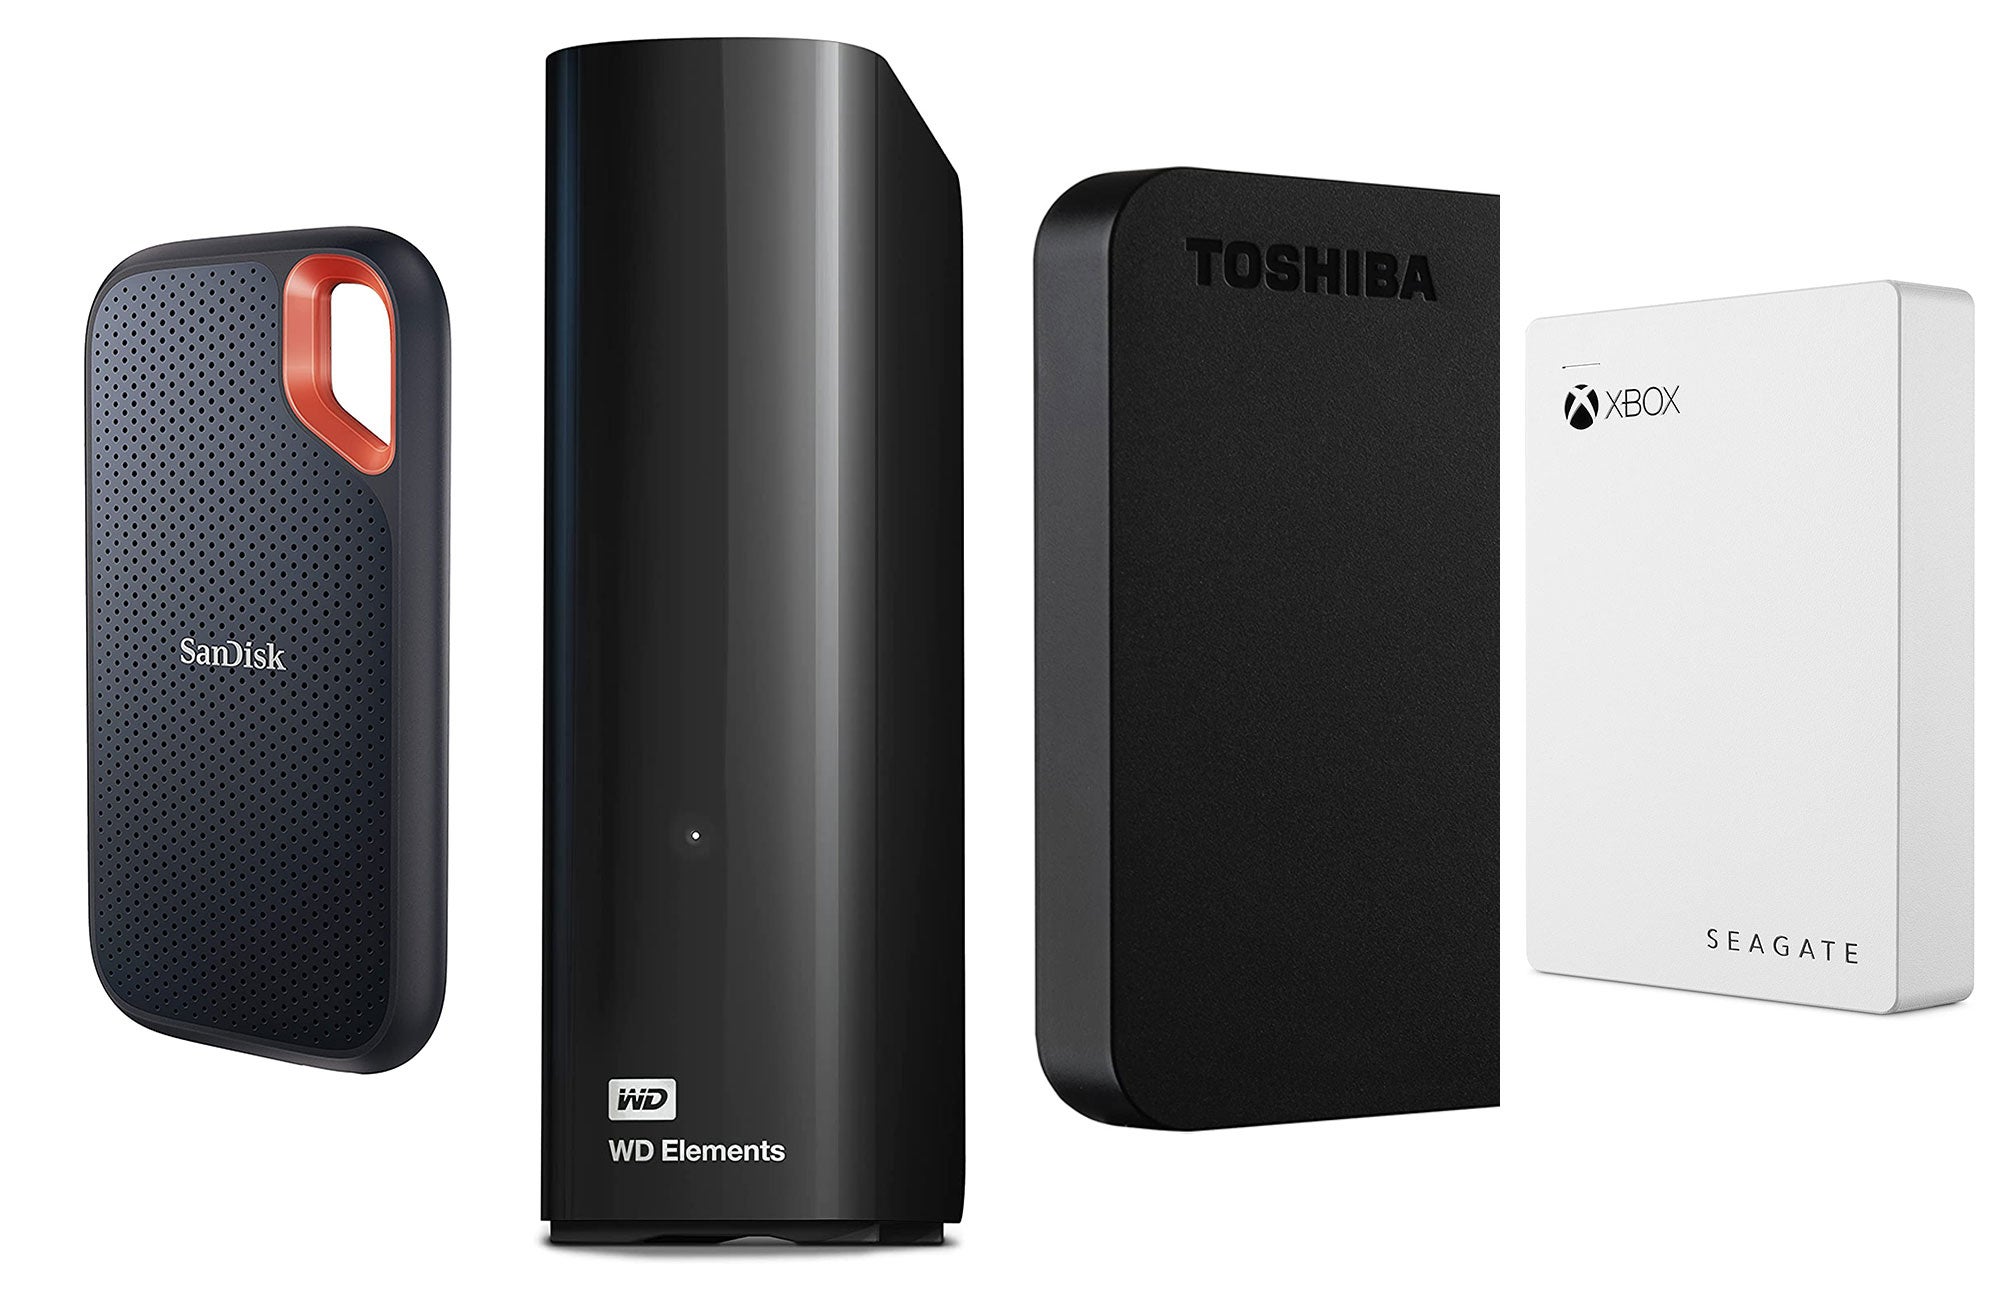 compenseren Evolueren Modderig Best external hard drives for Xbox One in 2023 | Popular Science